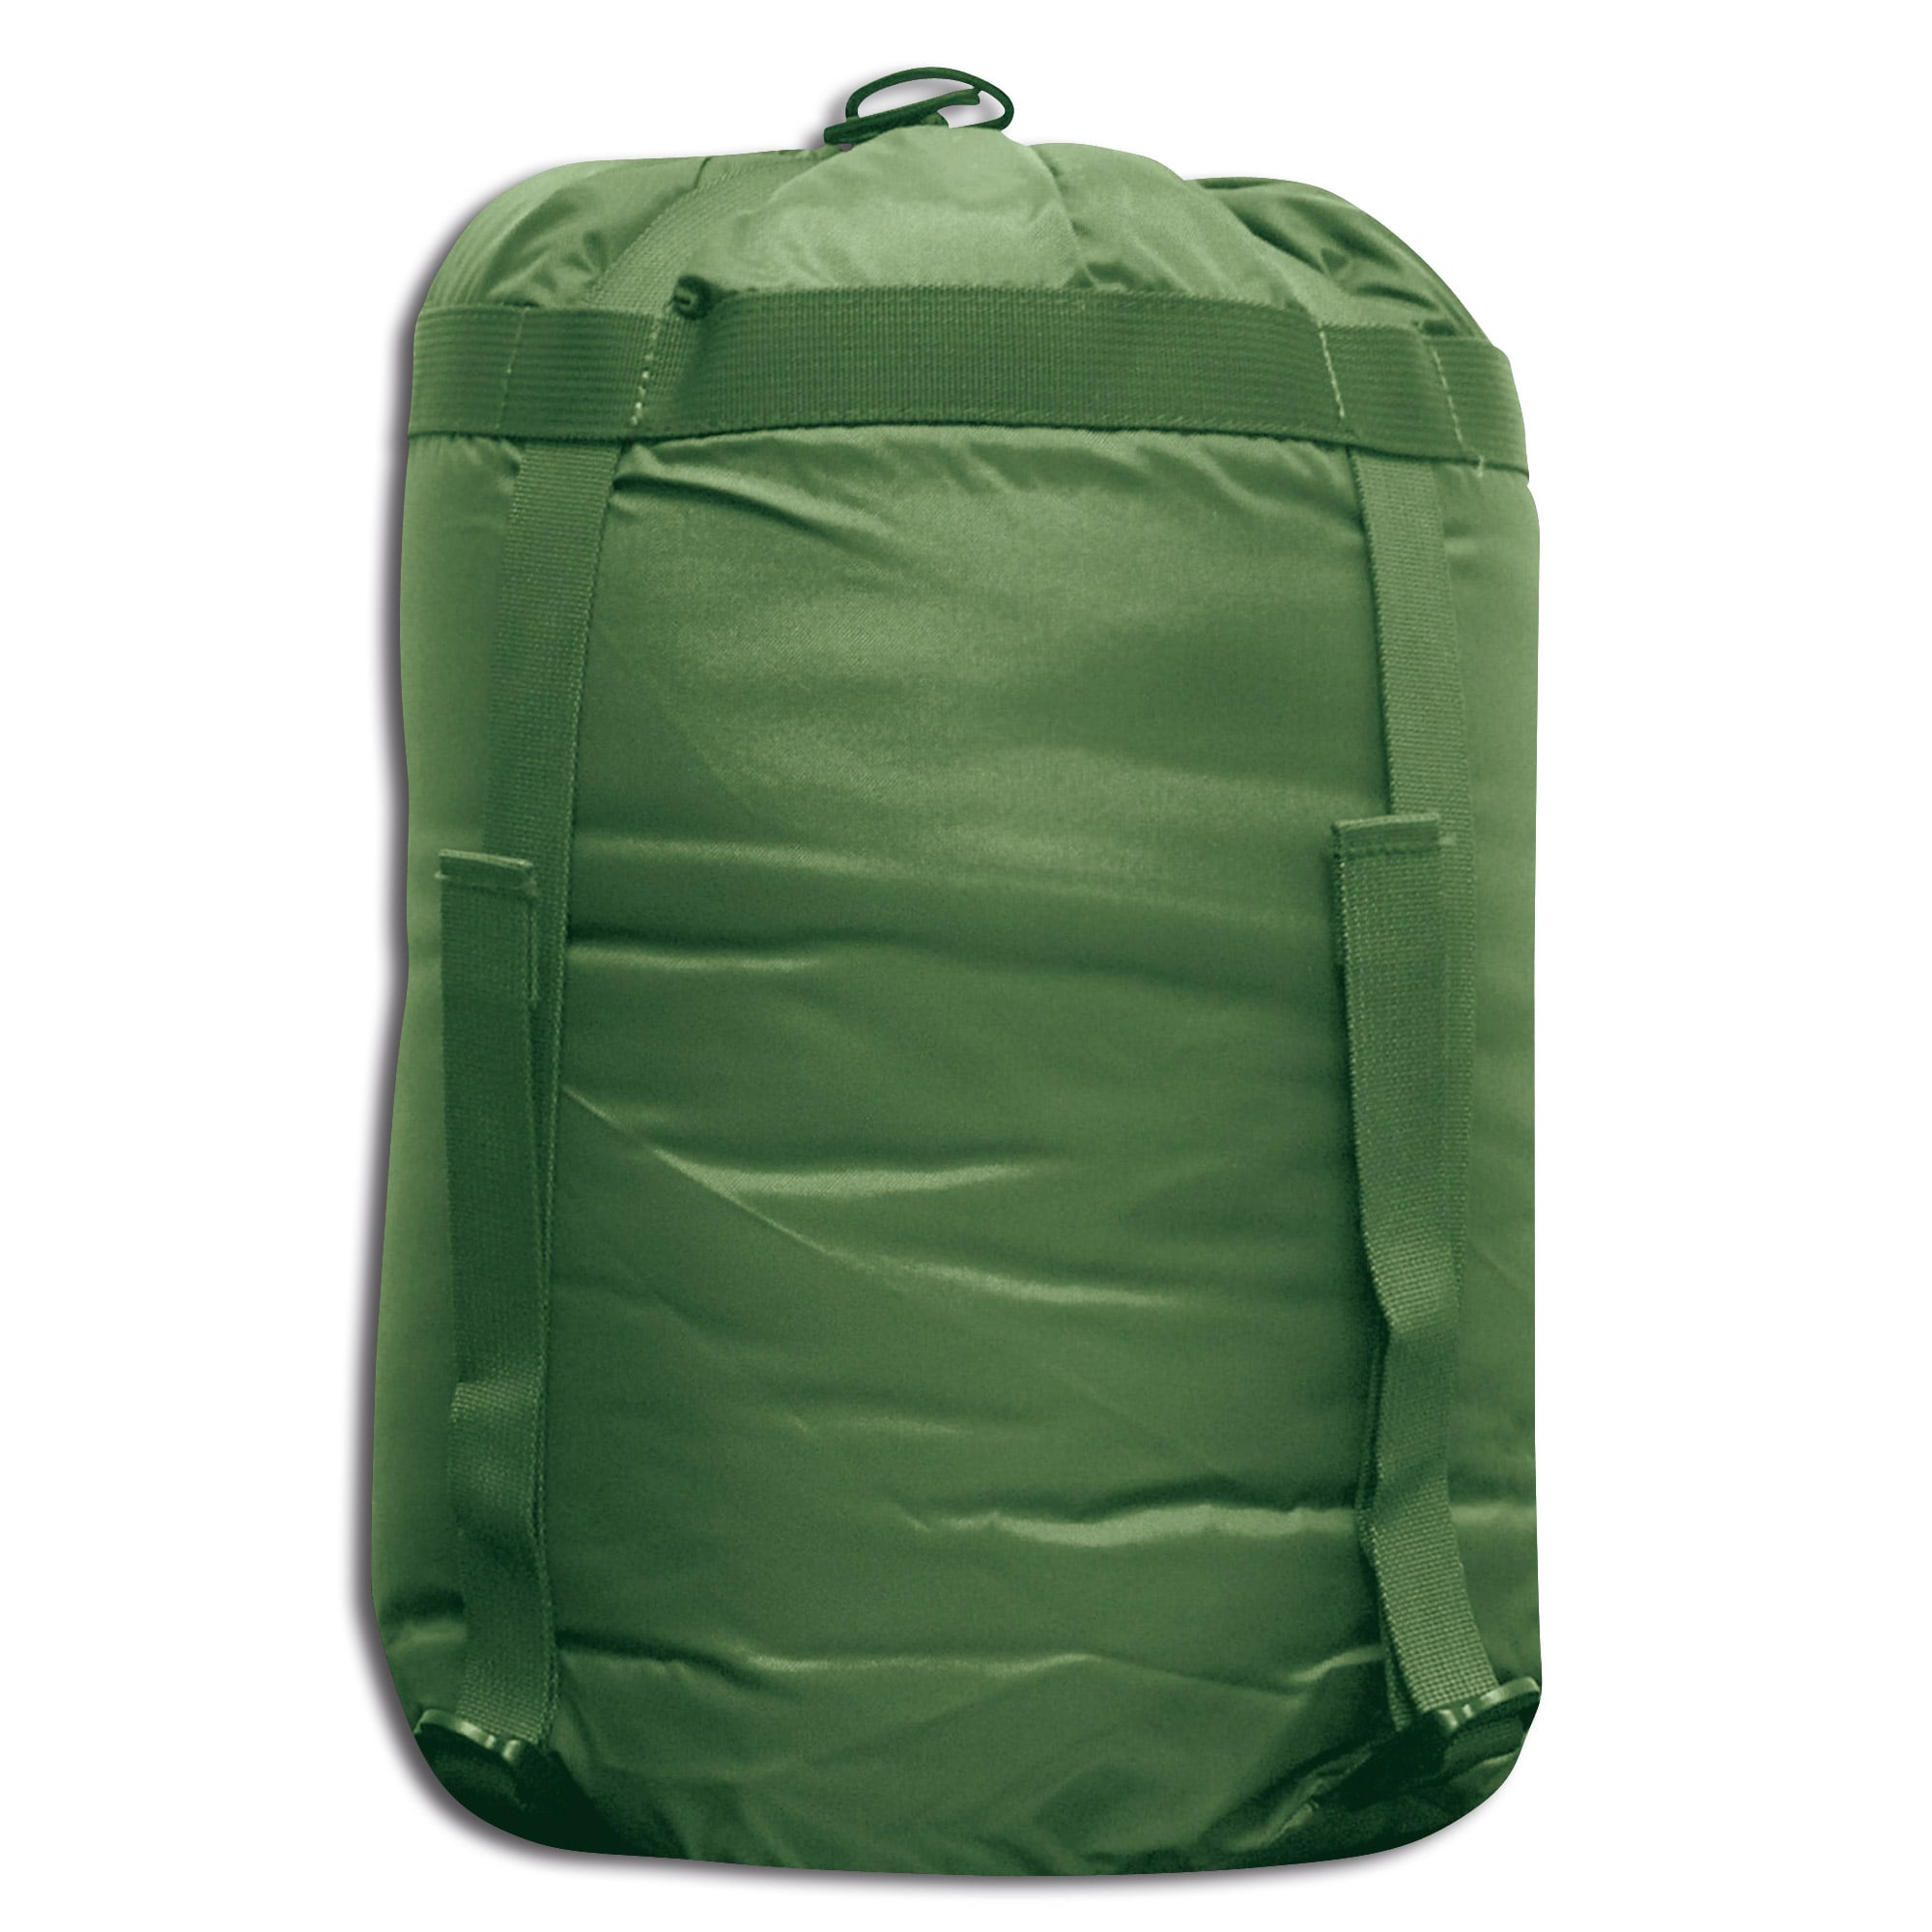 Purchase the Snugpak Sleeping Bag Softie 9 Hawk olive by ASMC